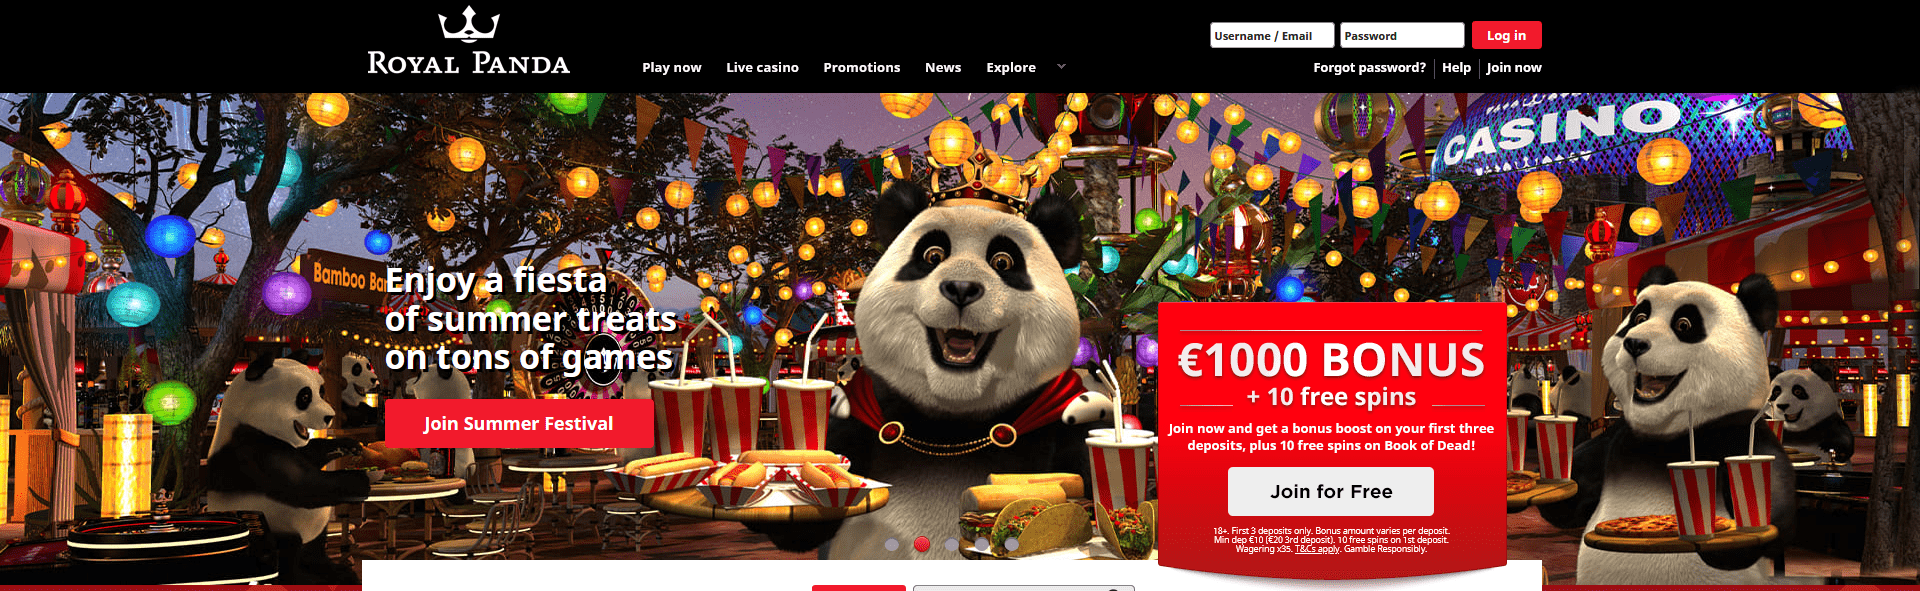 Screenshot Royal Panda casino.